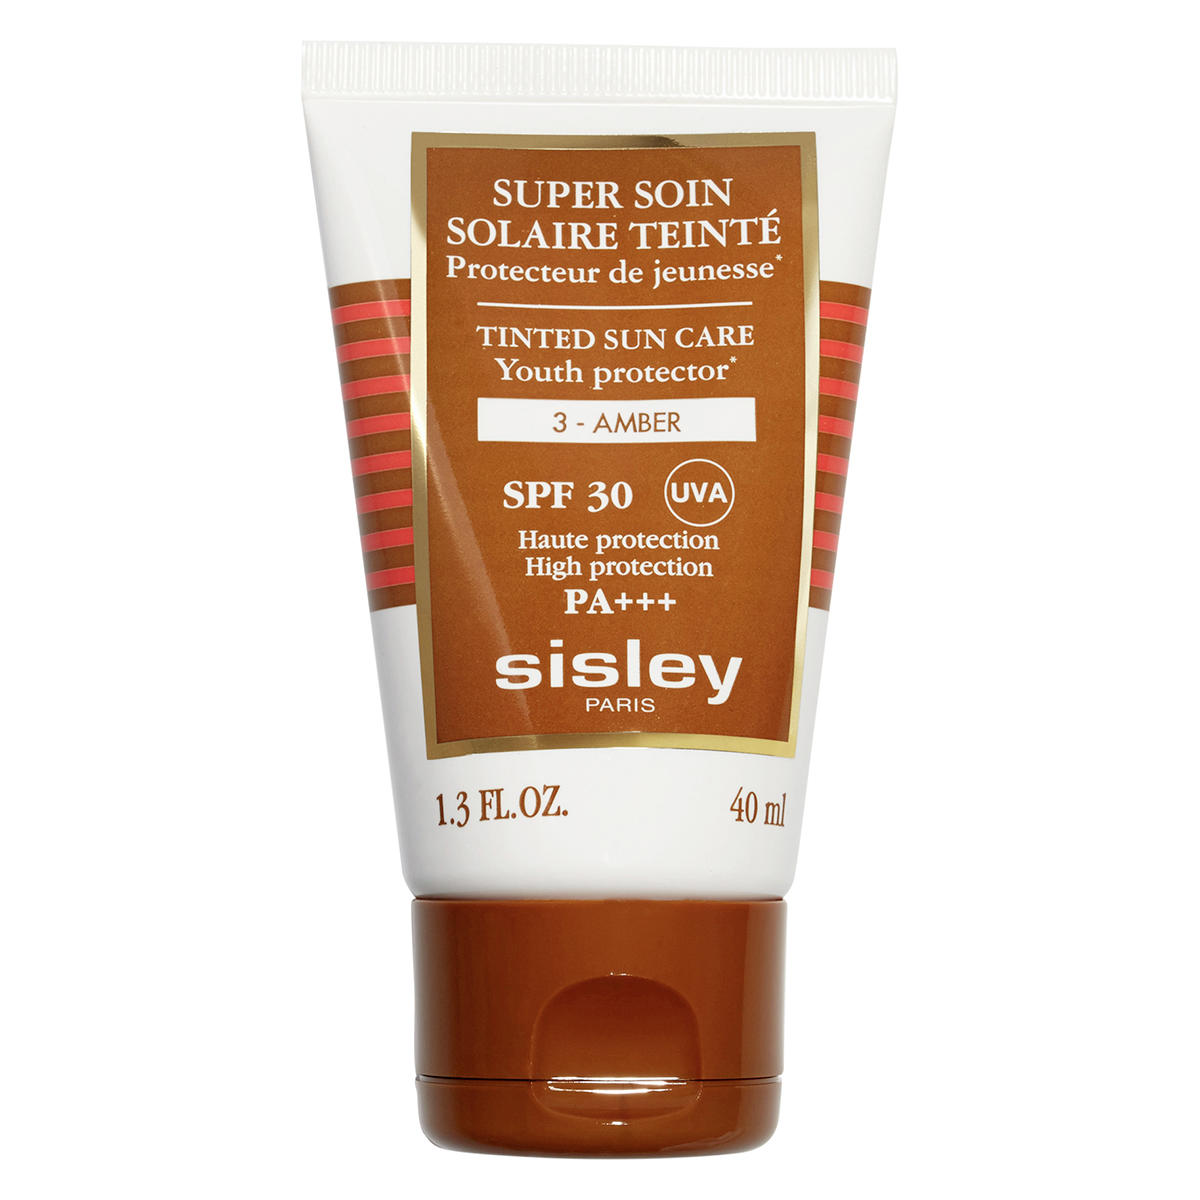 Sisley Paris Super Soin Solaire Teinté SPF 30 3 Amber, 40 ml - 1